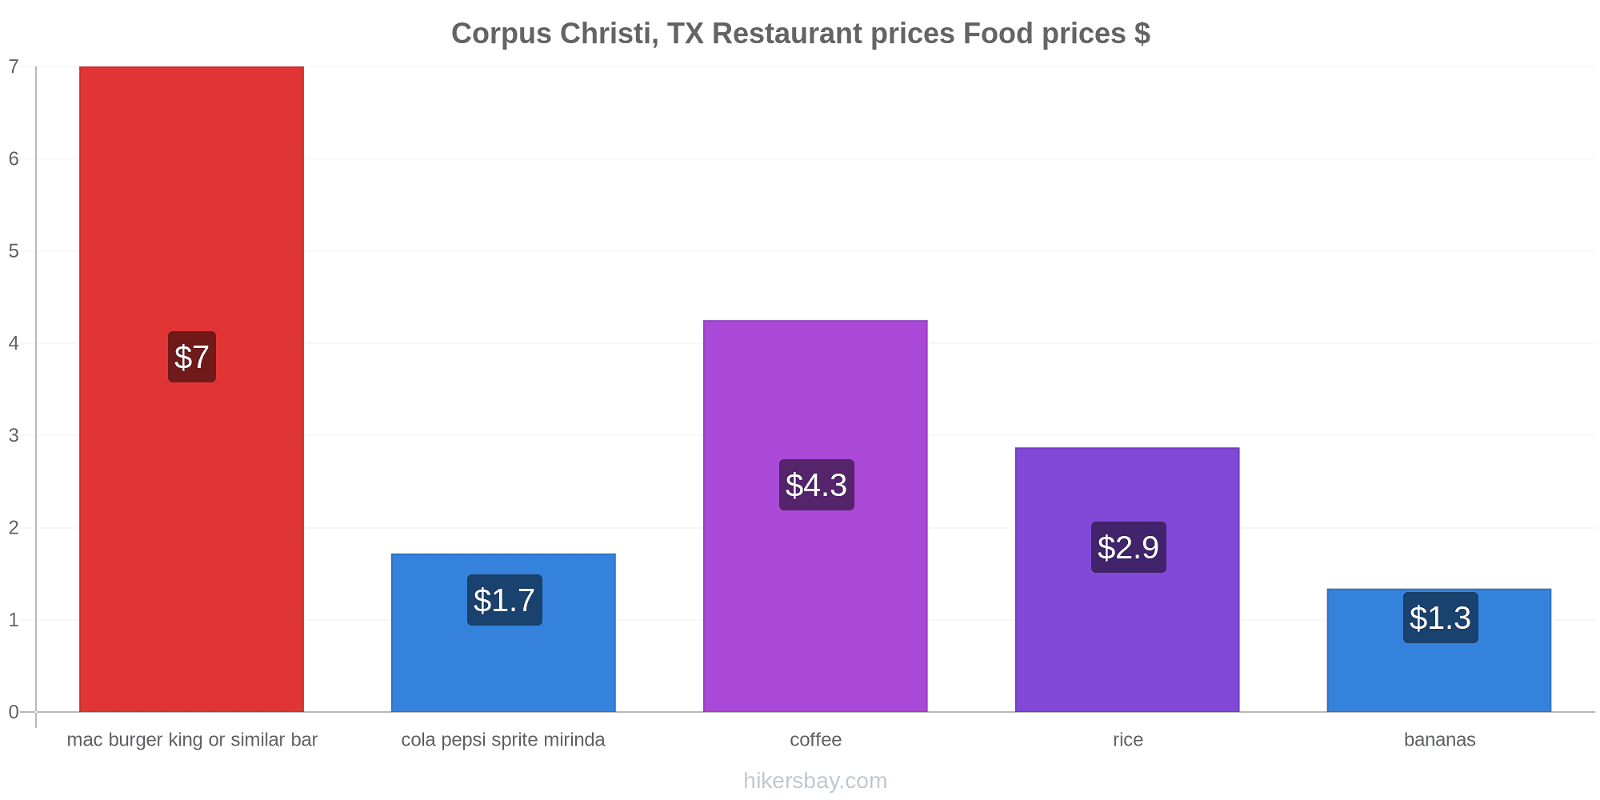 Corpus Christi, TX price changes hikersbay.com